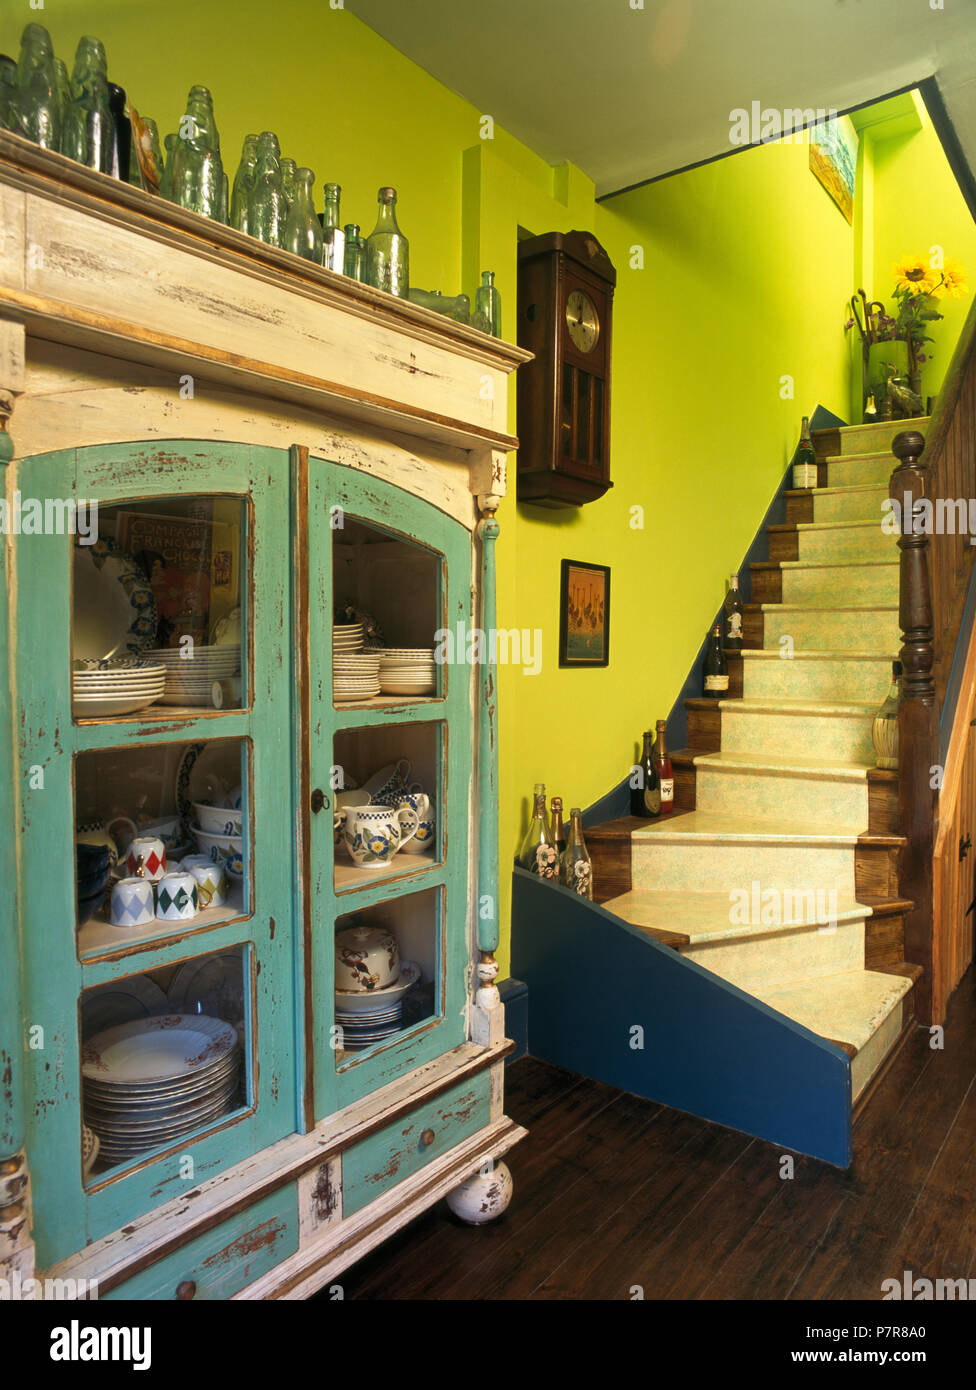 Painted Dresser Beside Wooden Staircase In Lime Green Nineties